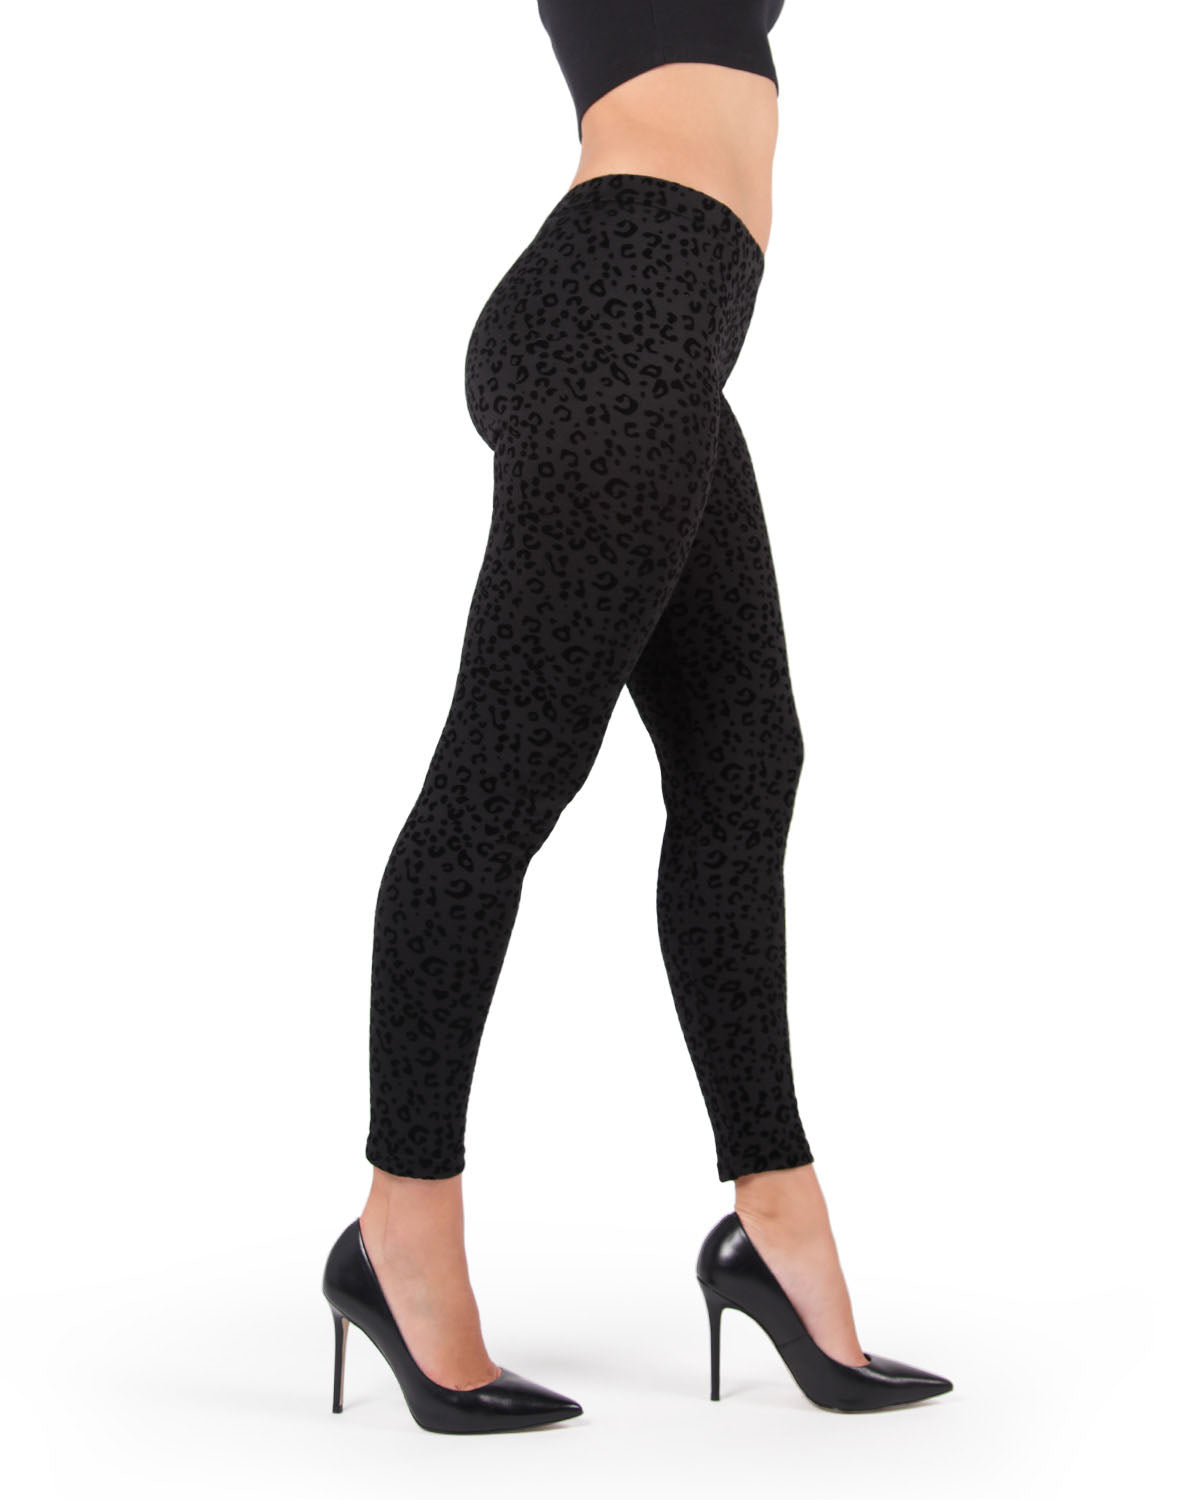 Lululemon Black Leopard Print Leggings Size 0 - $50 (48% Off Retail) - From  Erica